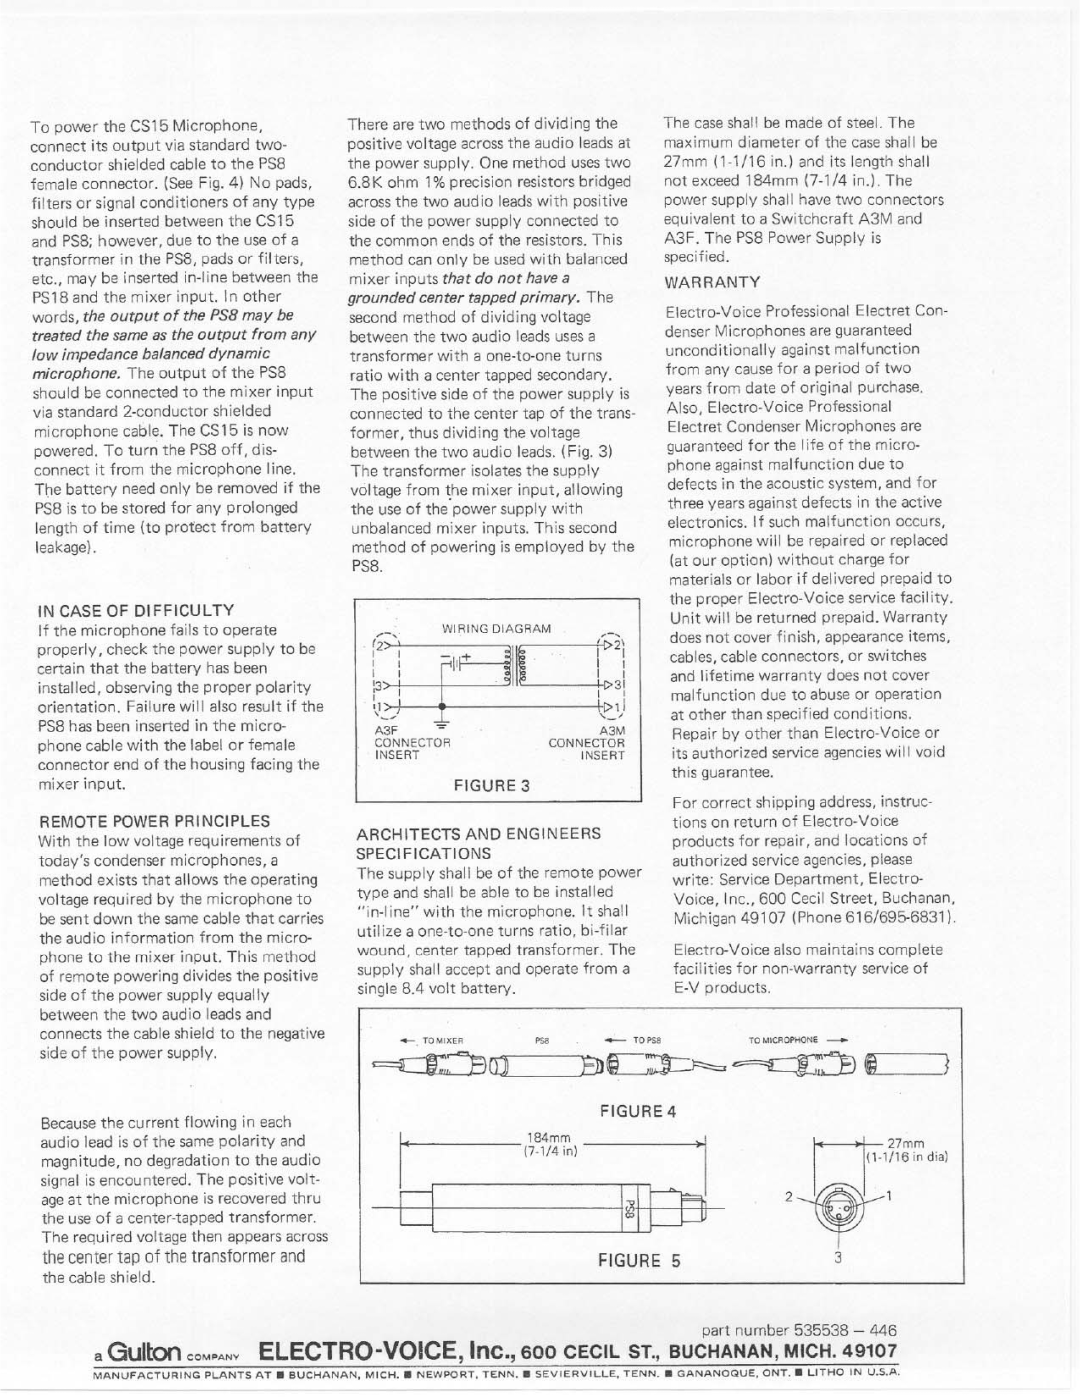 Electro-Voice PS8 manual 